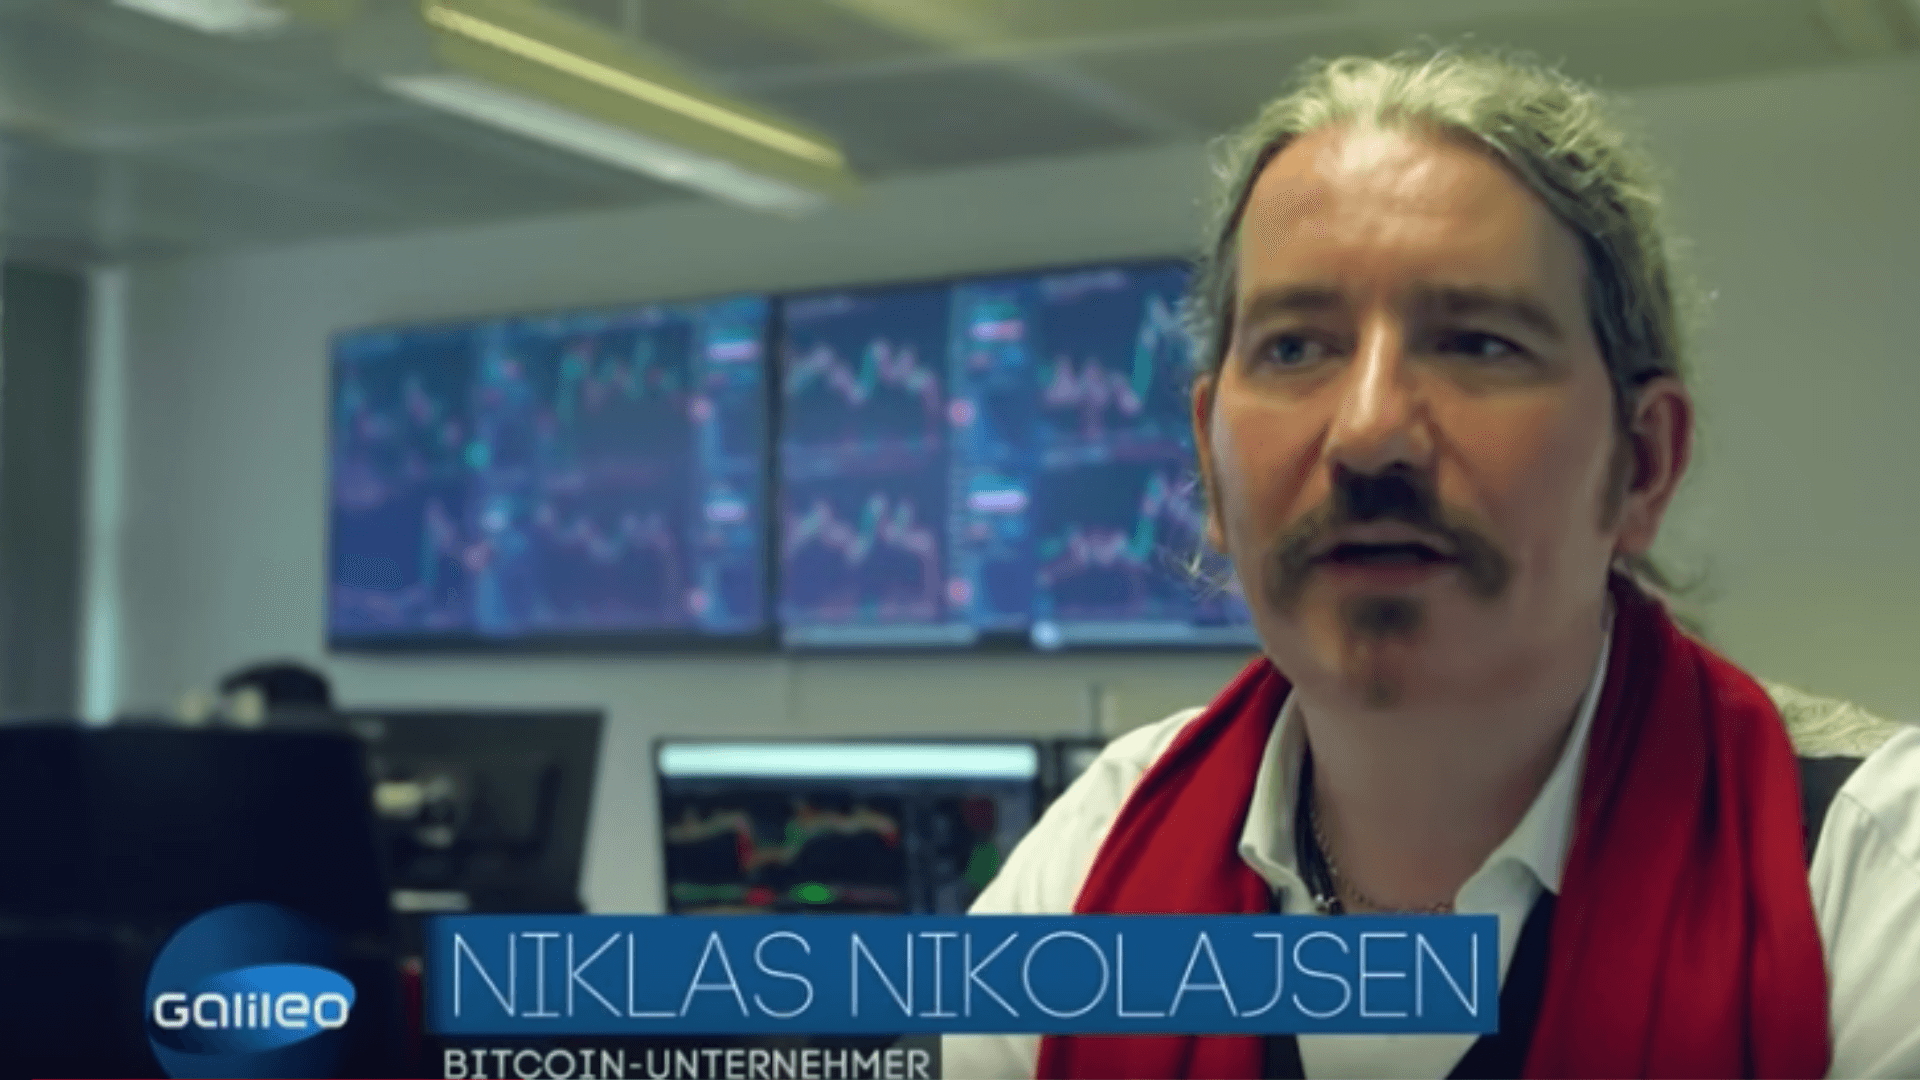 Niklas Nikolajsen bei Galileo